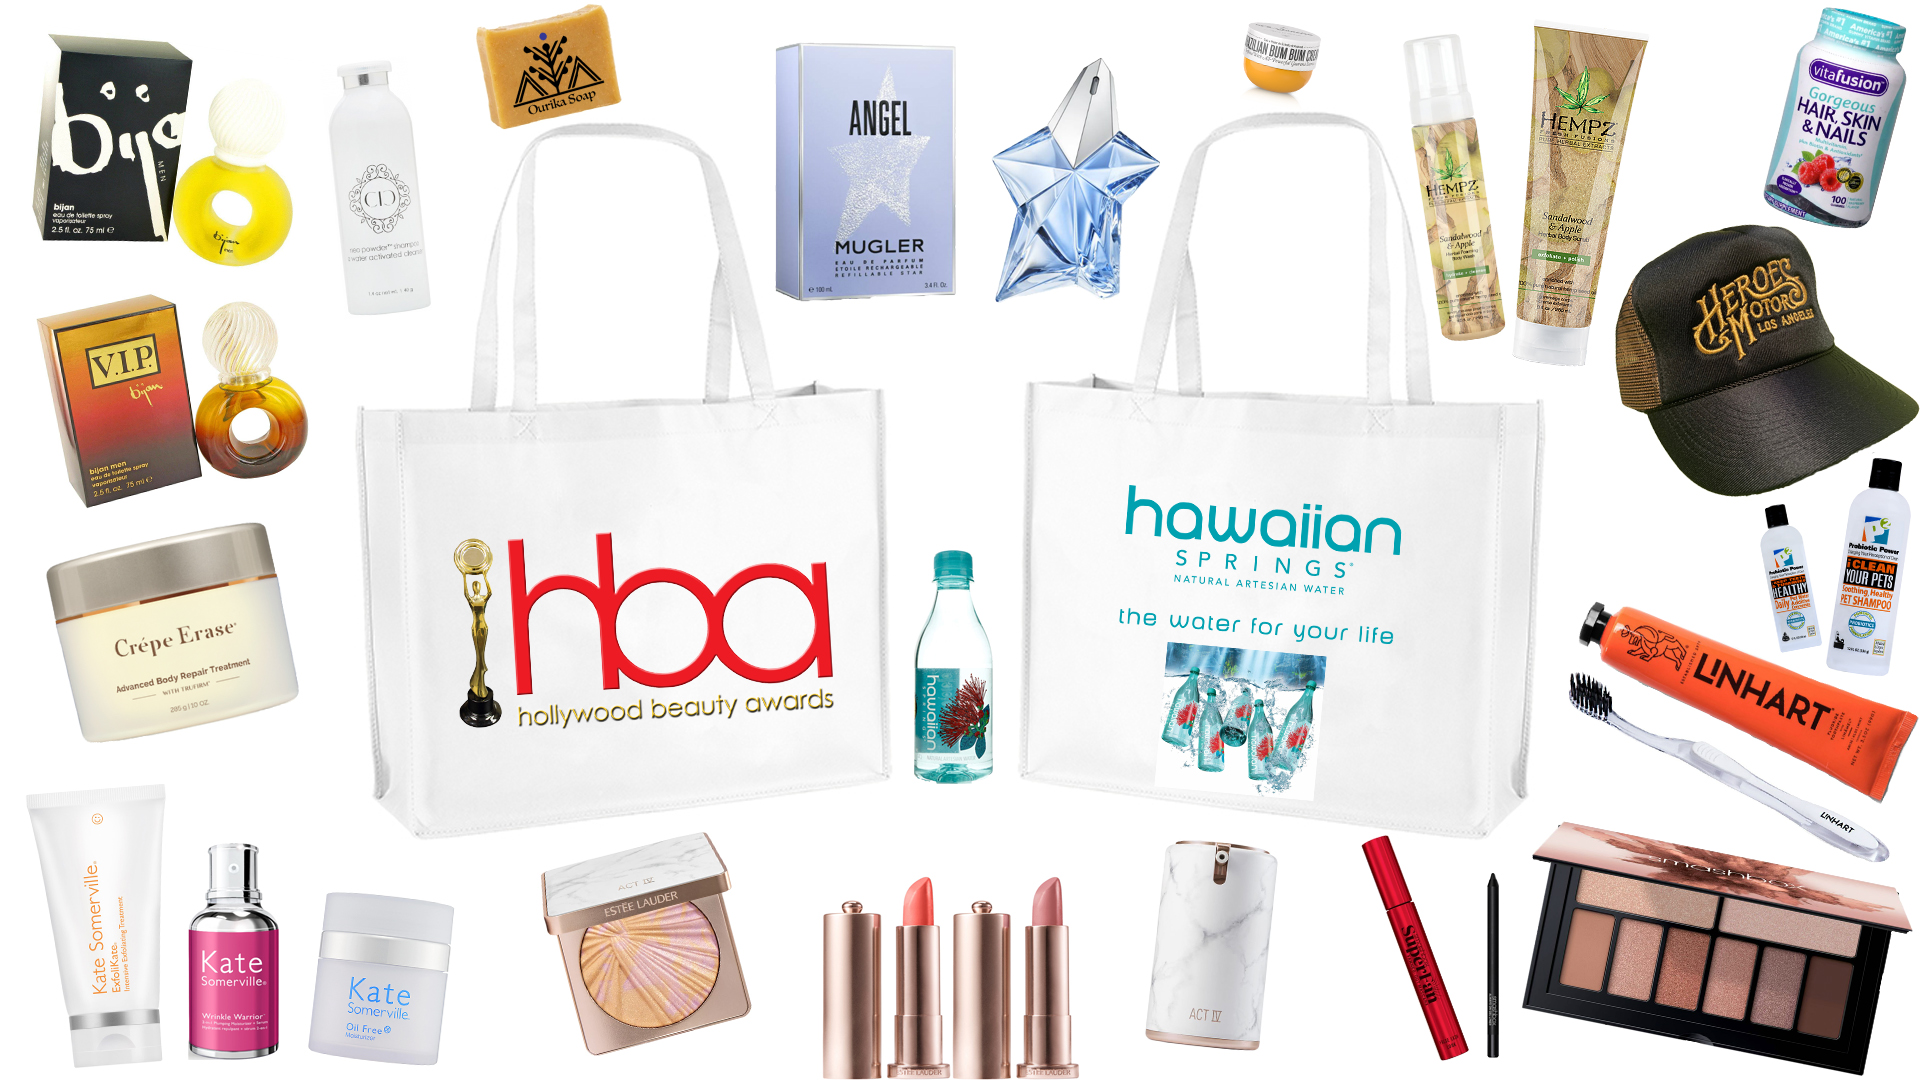 2020 Hollywood Beauty Awards gift bag, hawaiian springs water